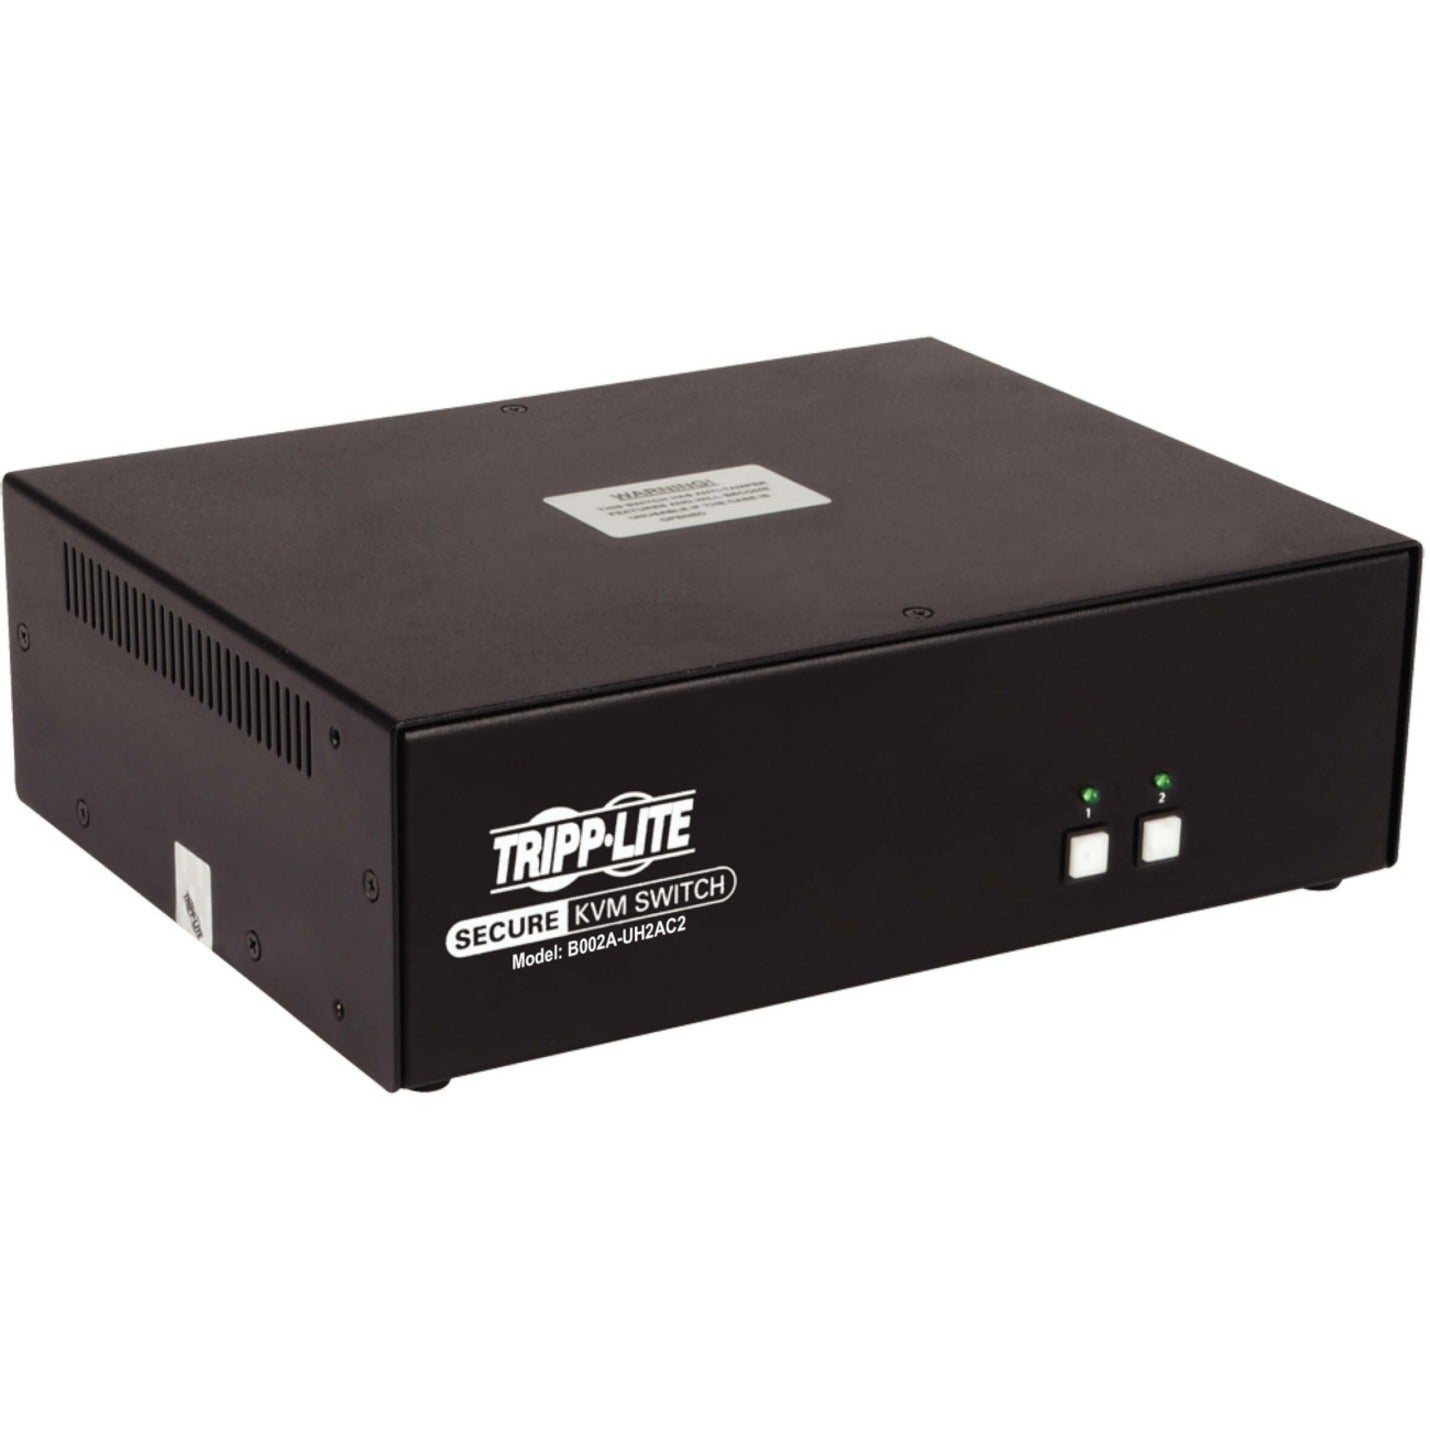 Tripp Lite B002A-UH2AC2 2-Port Dual-Monitor Secure KVM Switch HDMI - 4K NIAP PP3.0 Audio CAC TAA